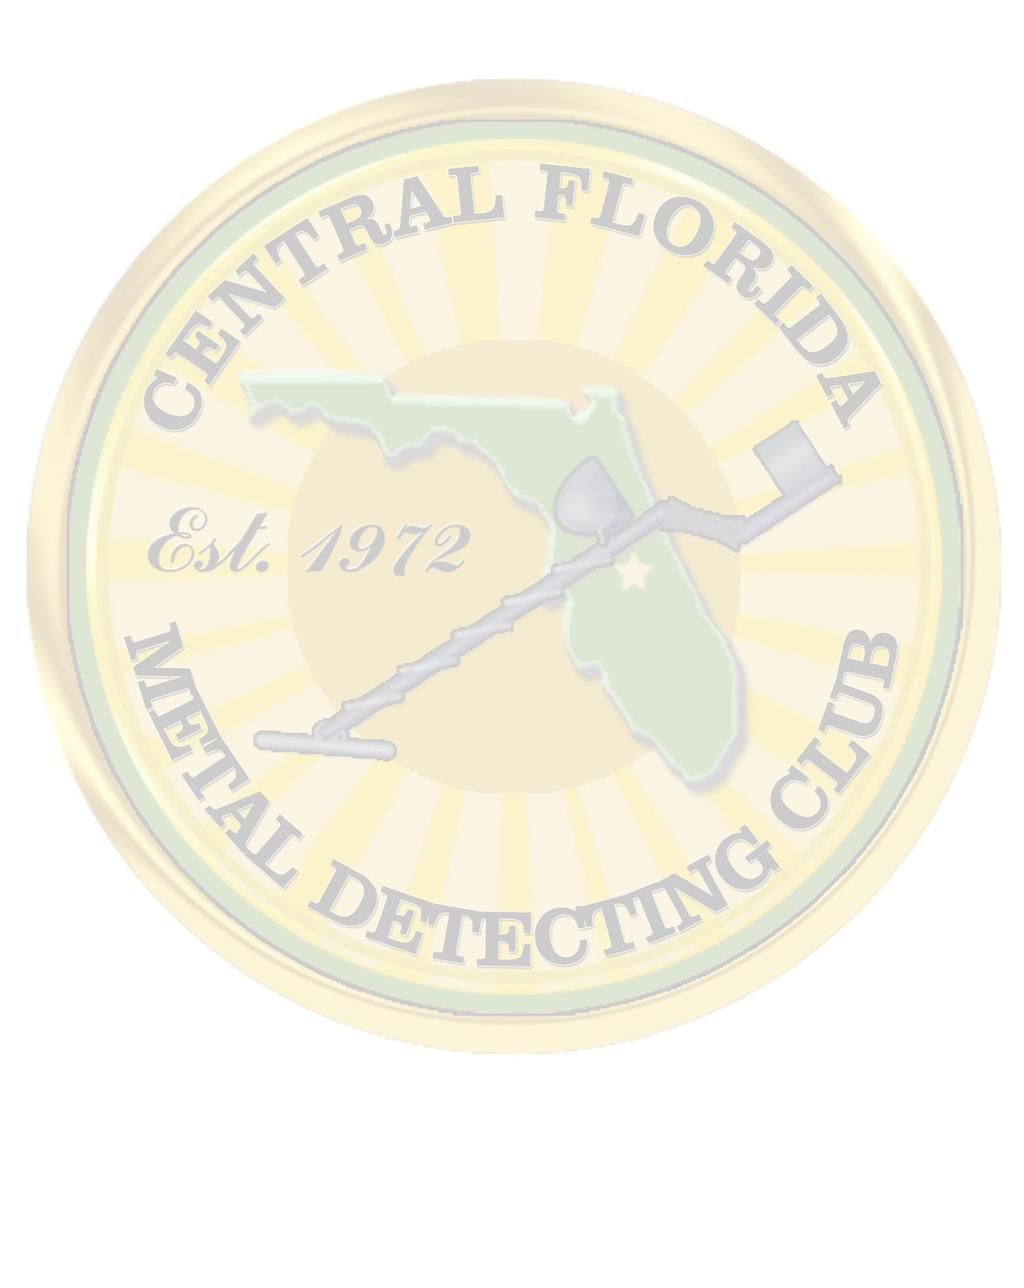 The Central Florida Metal Detecting Club President: Carolyn Harwick 679 Sullivan St. Deltona, FL 327245 (407-580-2676) CarolynHarwick@gmail.